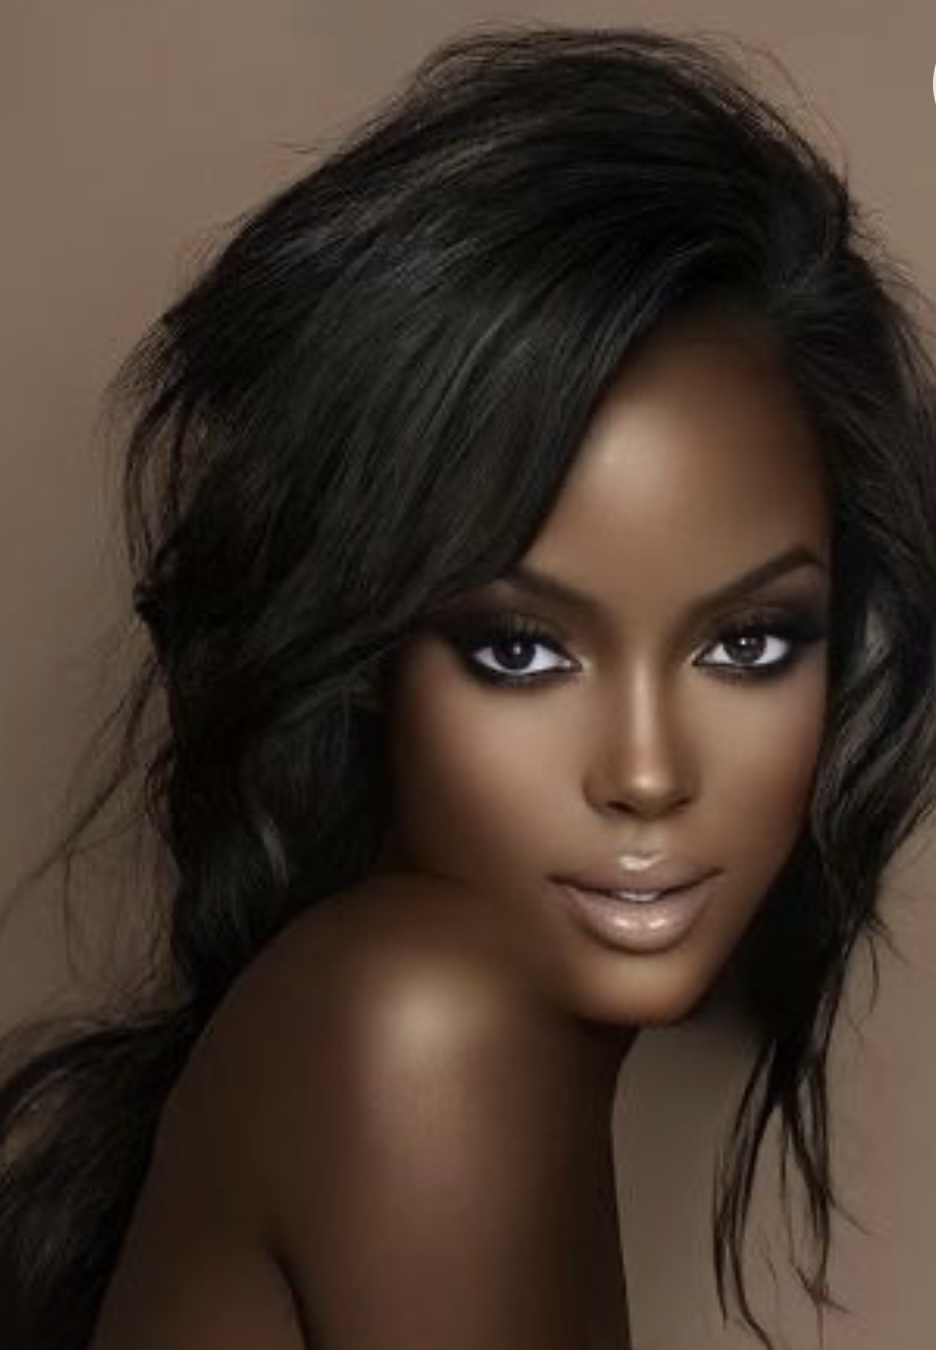 Beatiful color of eyes of black women